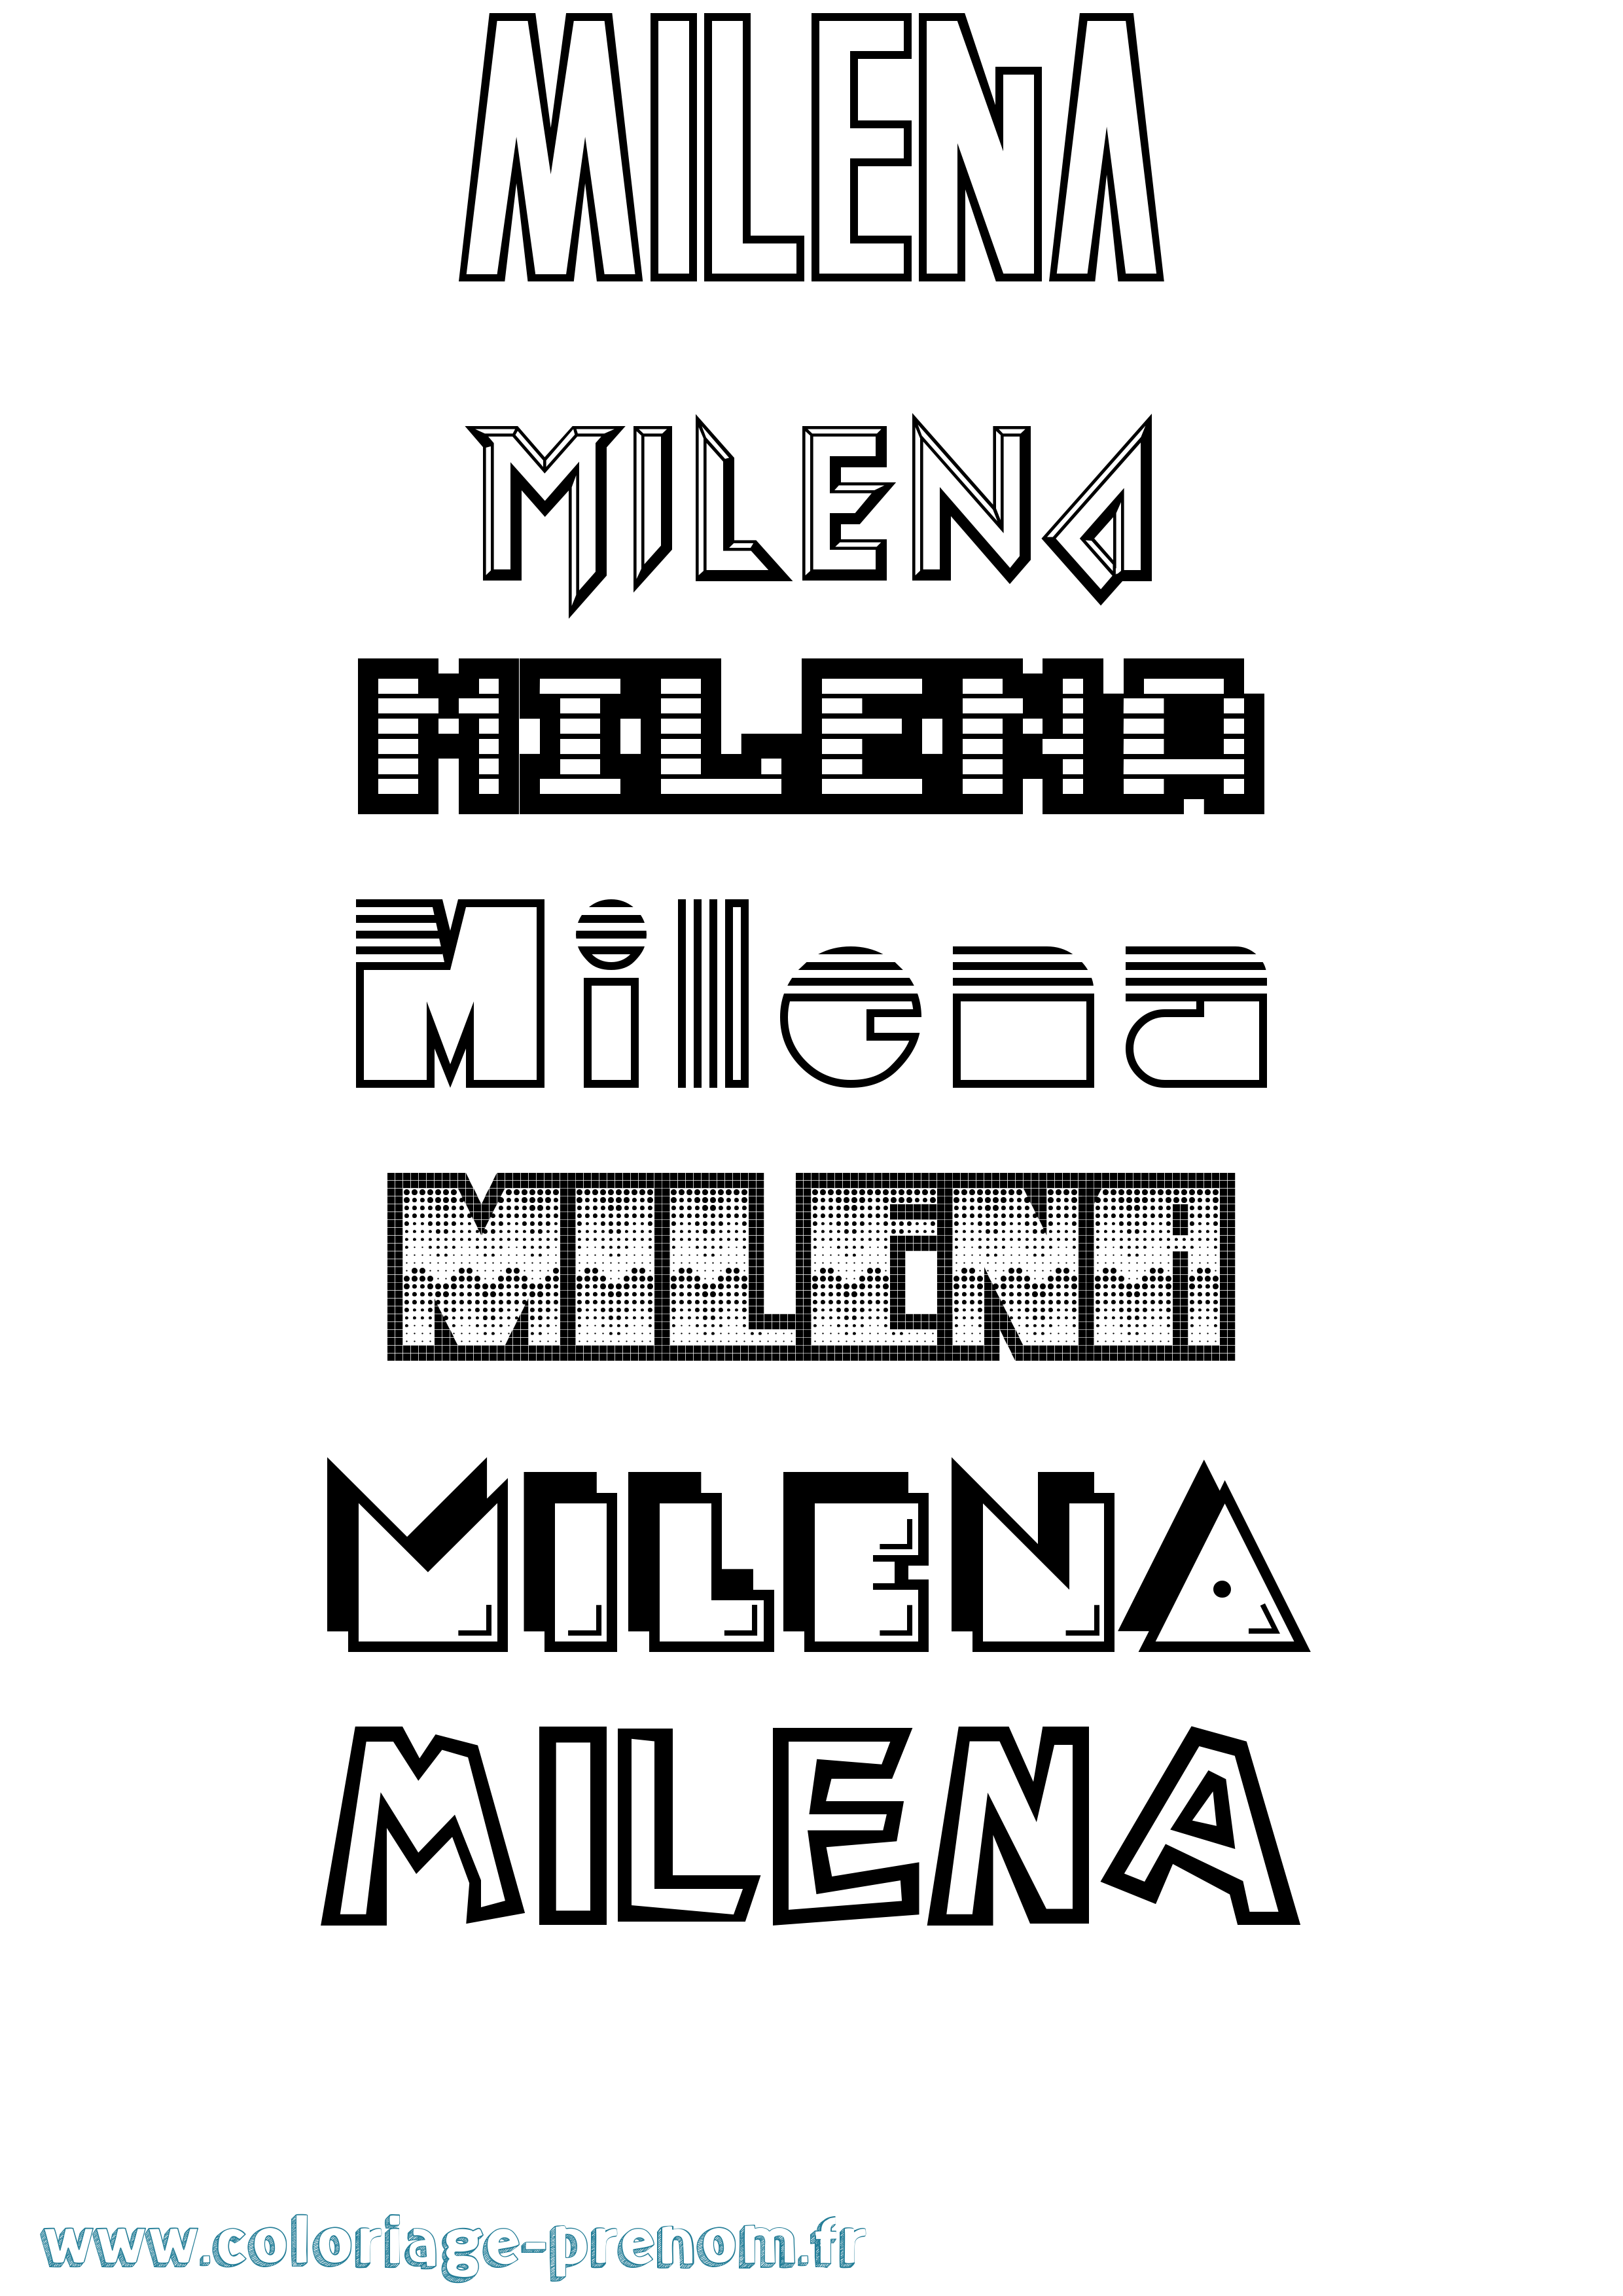 Coloriage prénom Milena